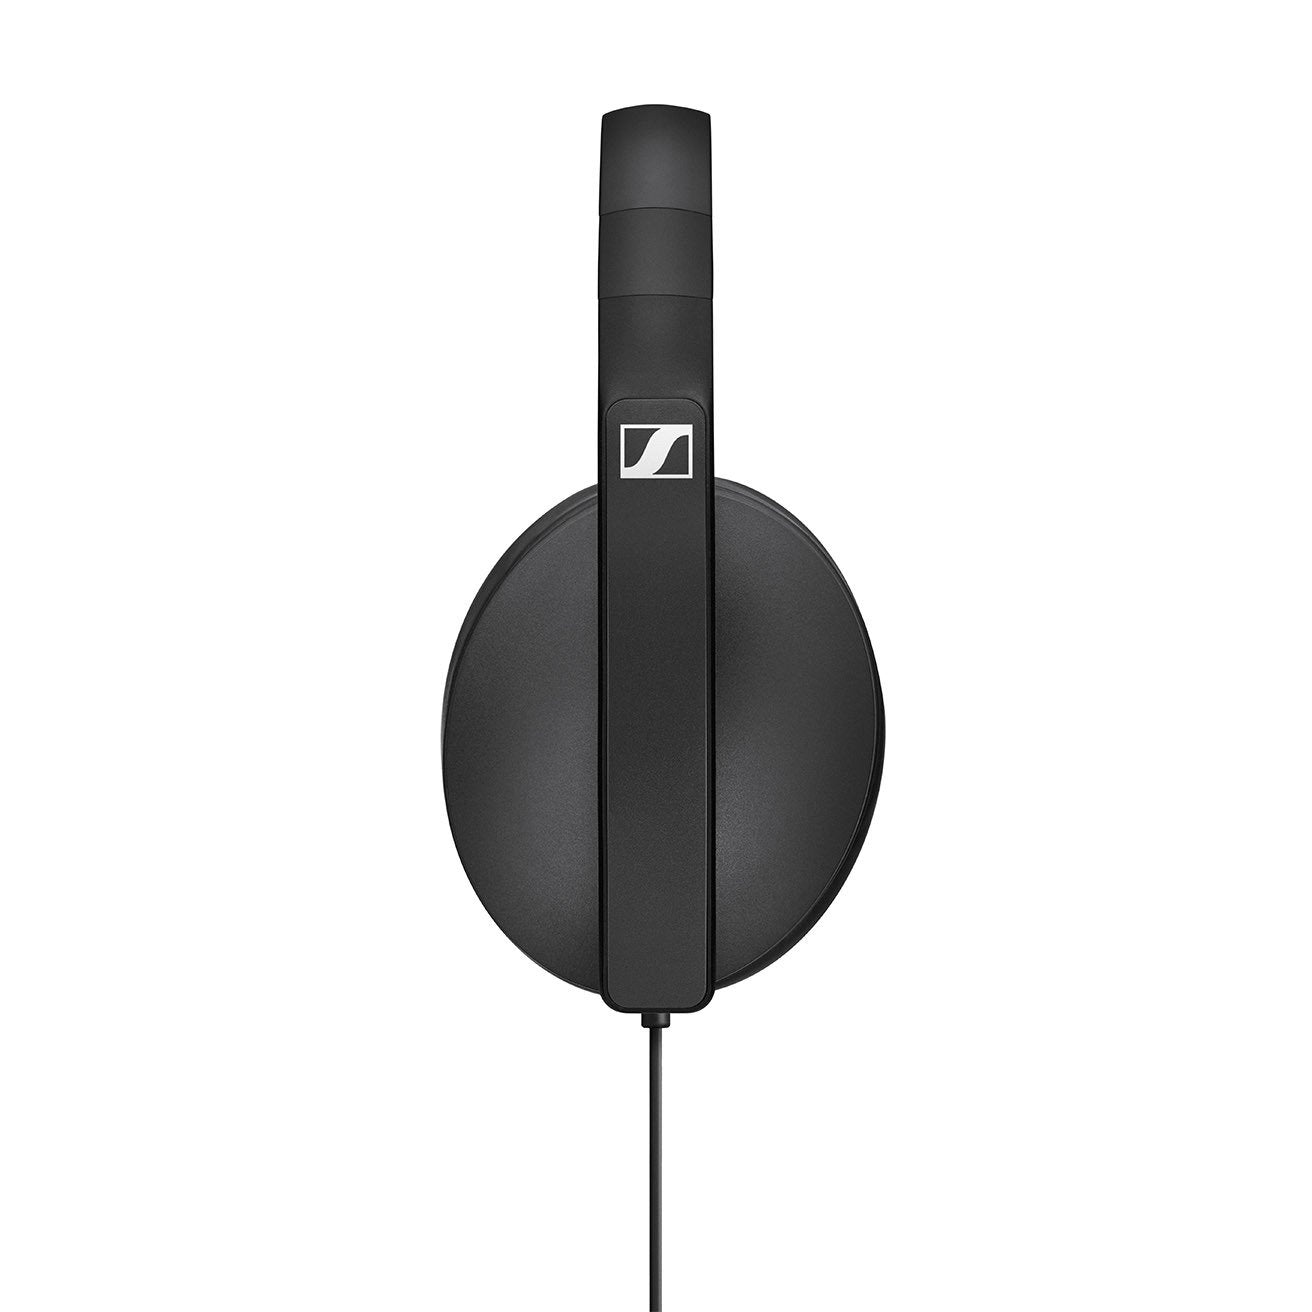 Sennheiser HD 300 Headphone - Black